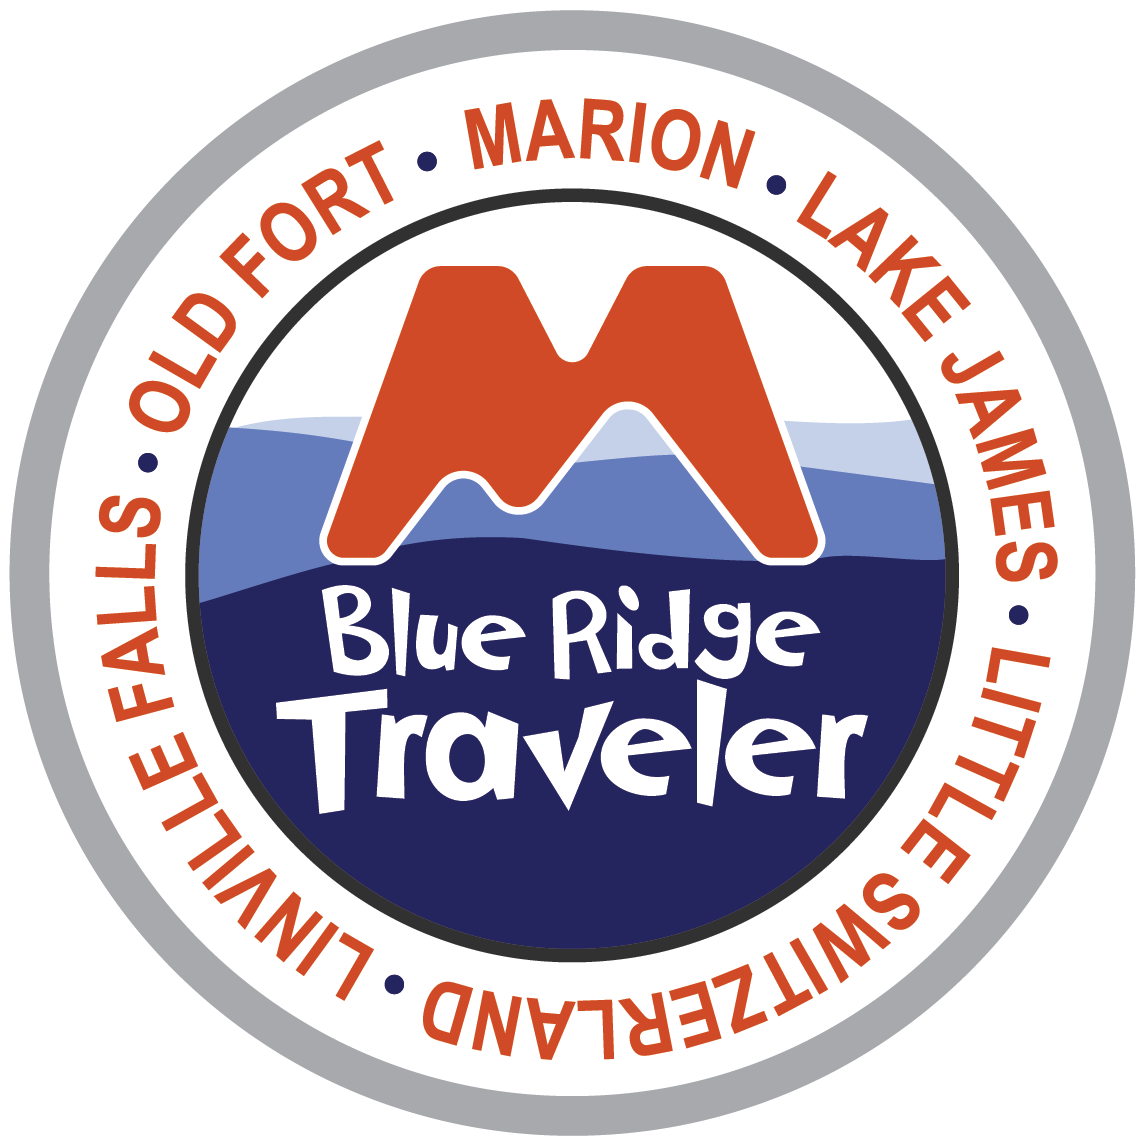 Blue Ridge Traveler